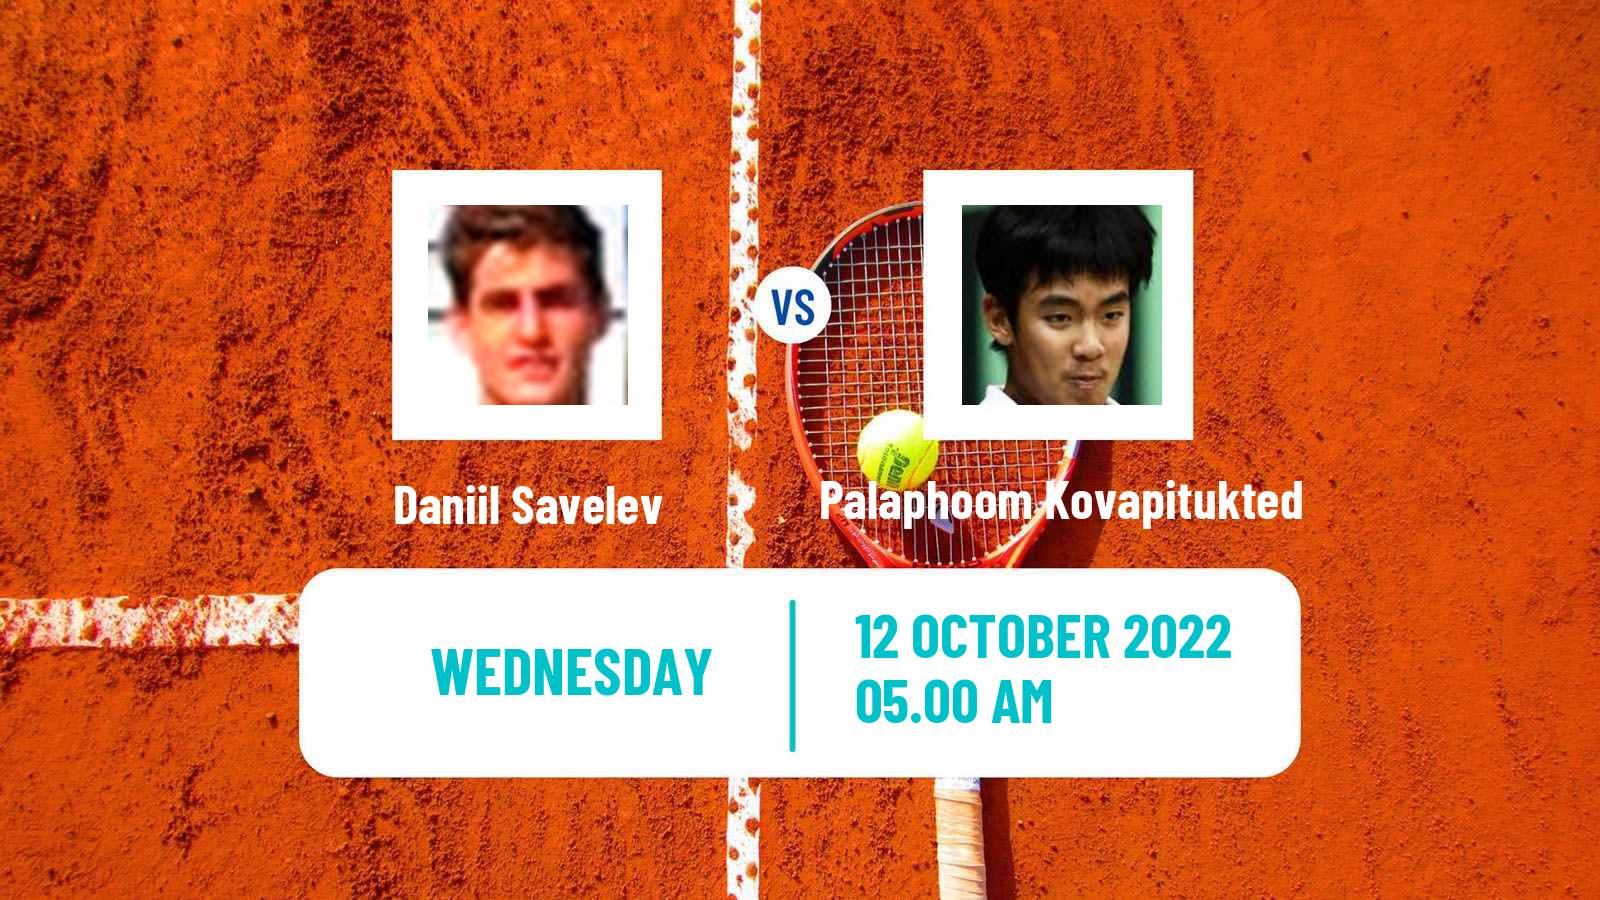 Tennis ITF Tournaments Daniil Savelev - Palaphoom Kovapitukted